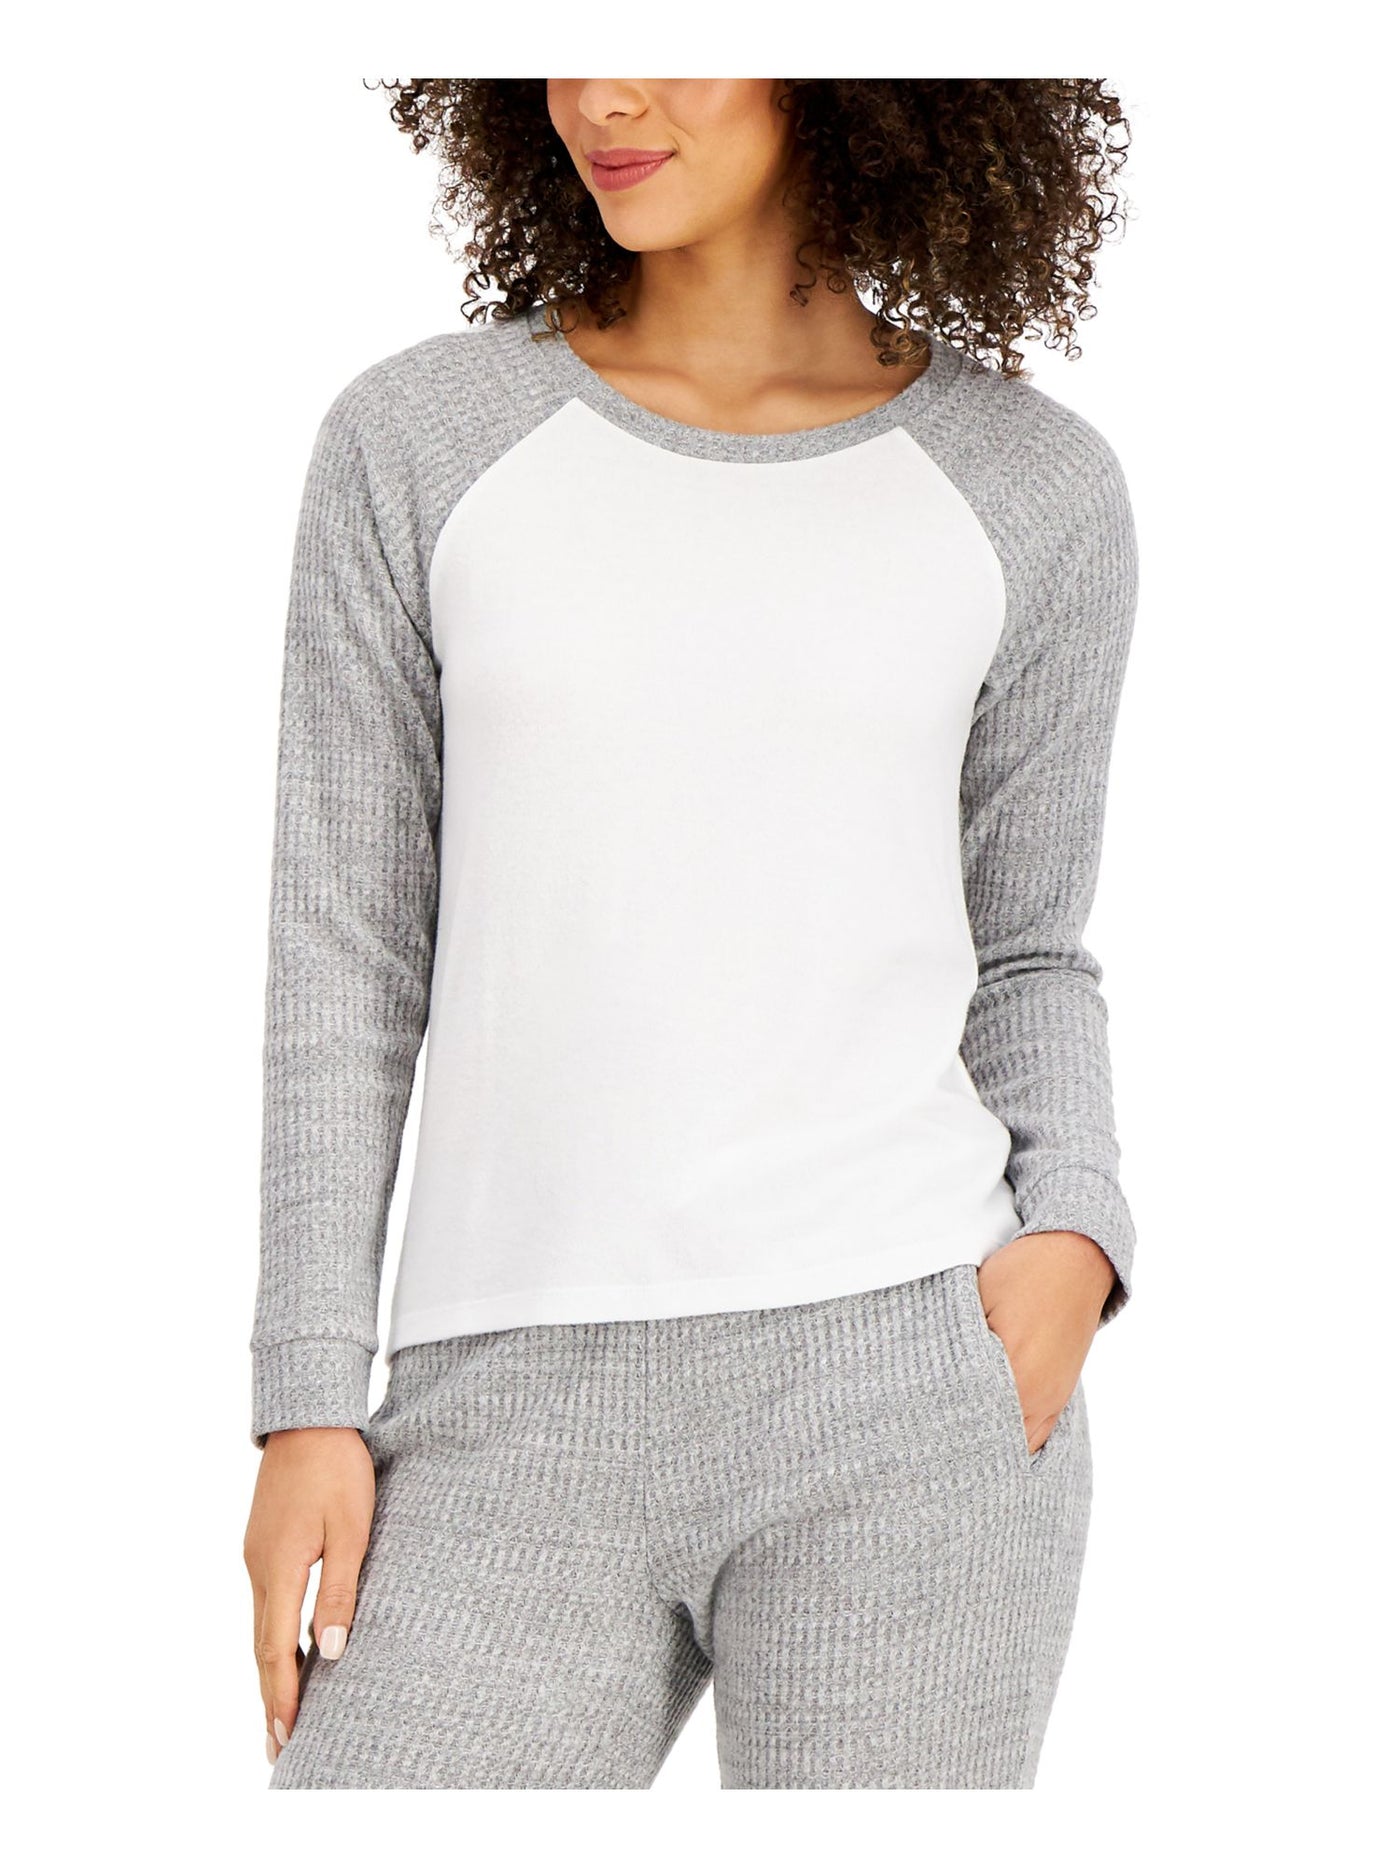 ALFANI Intimates Gray Sleep Shirt Pajama Top XL